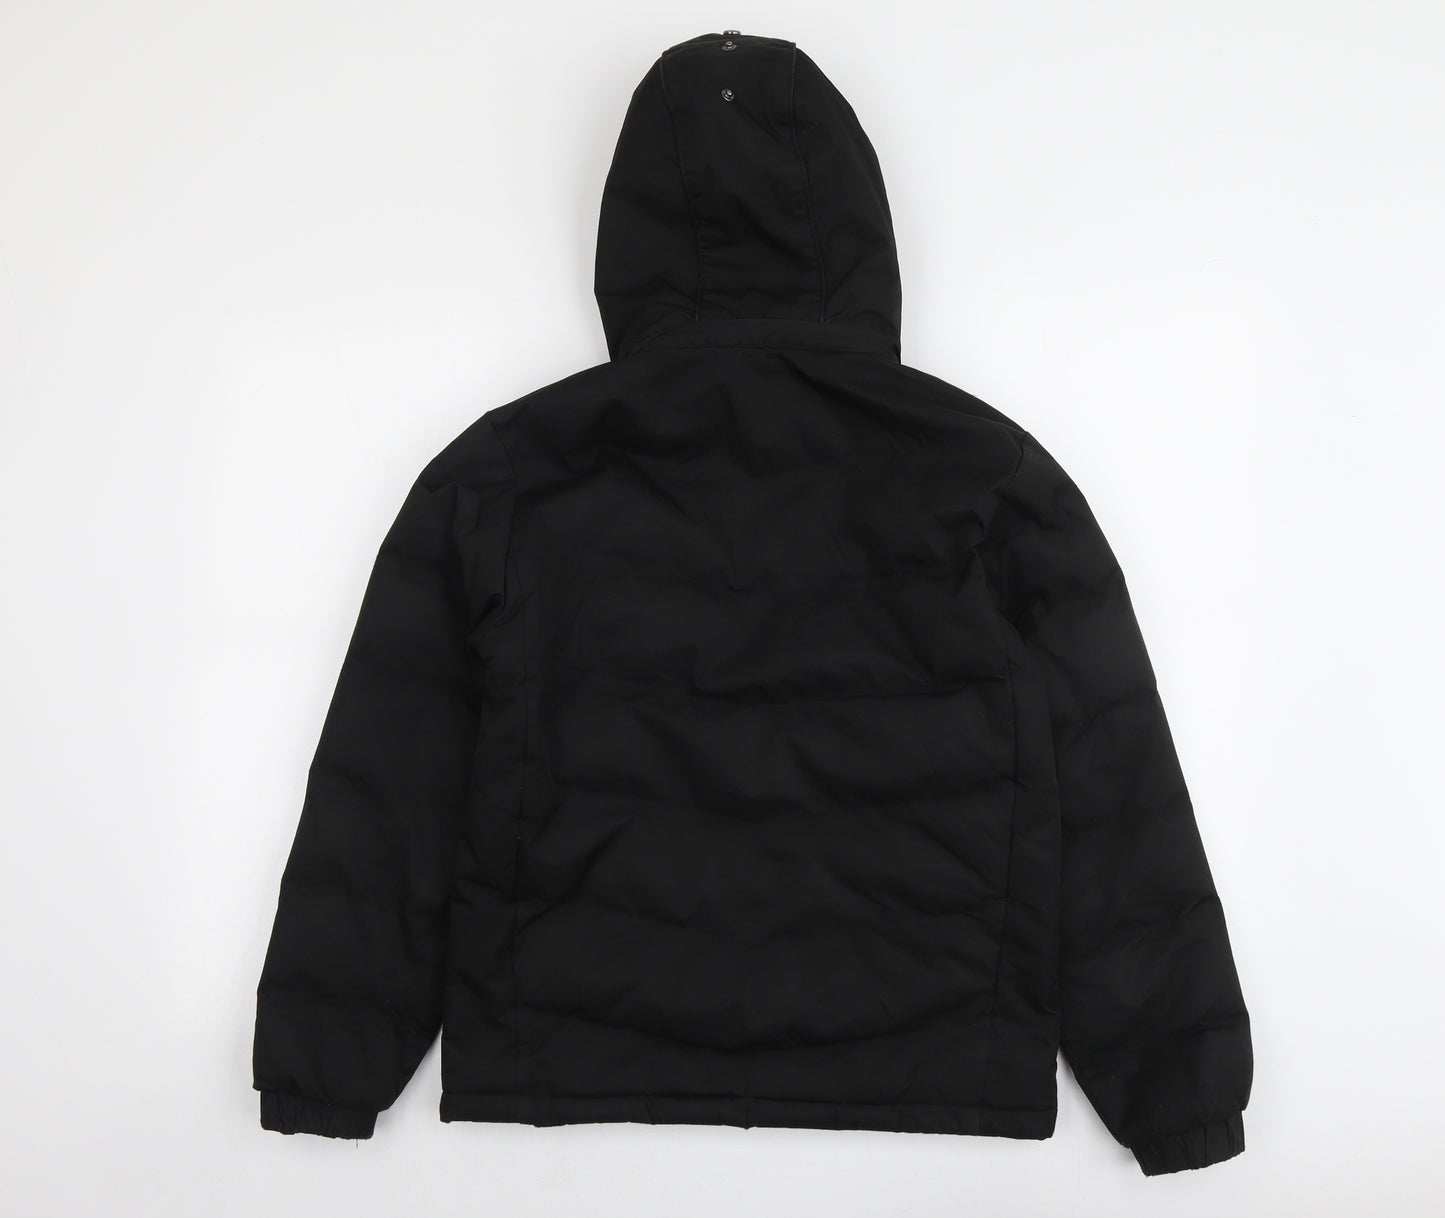 Trespass Boys Black Windbreaker Jacket Size 11-12 Years Zip - Zipped Pockets